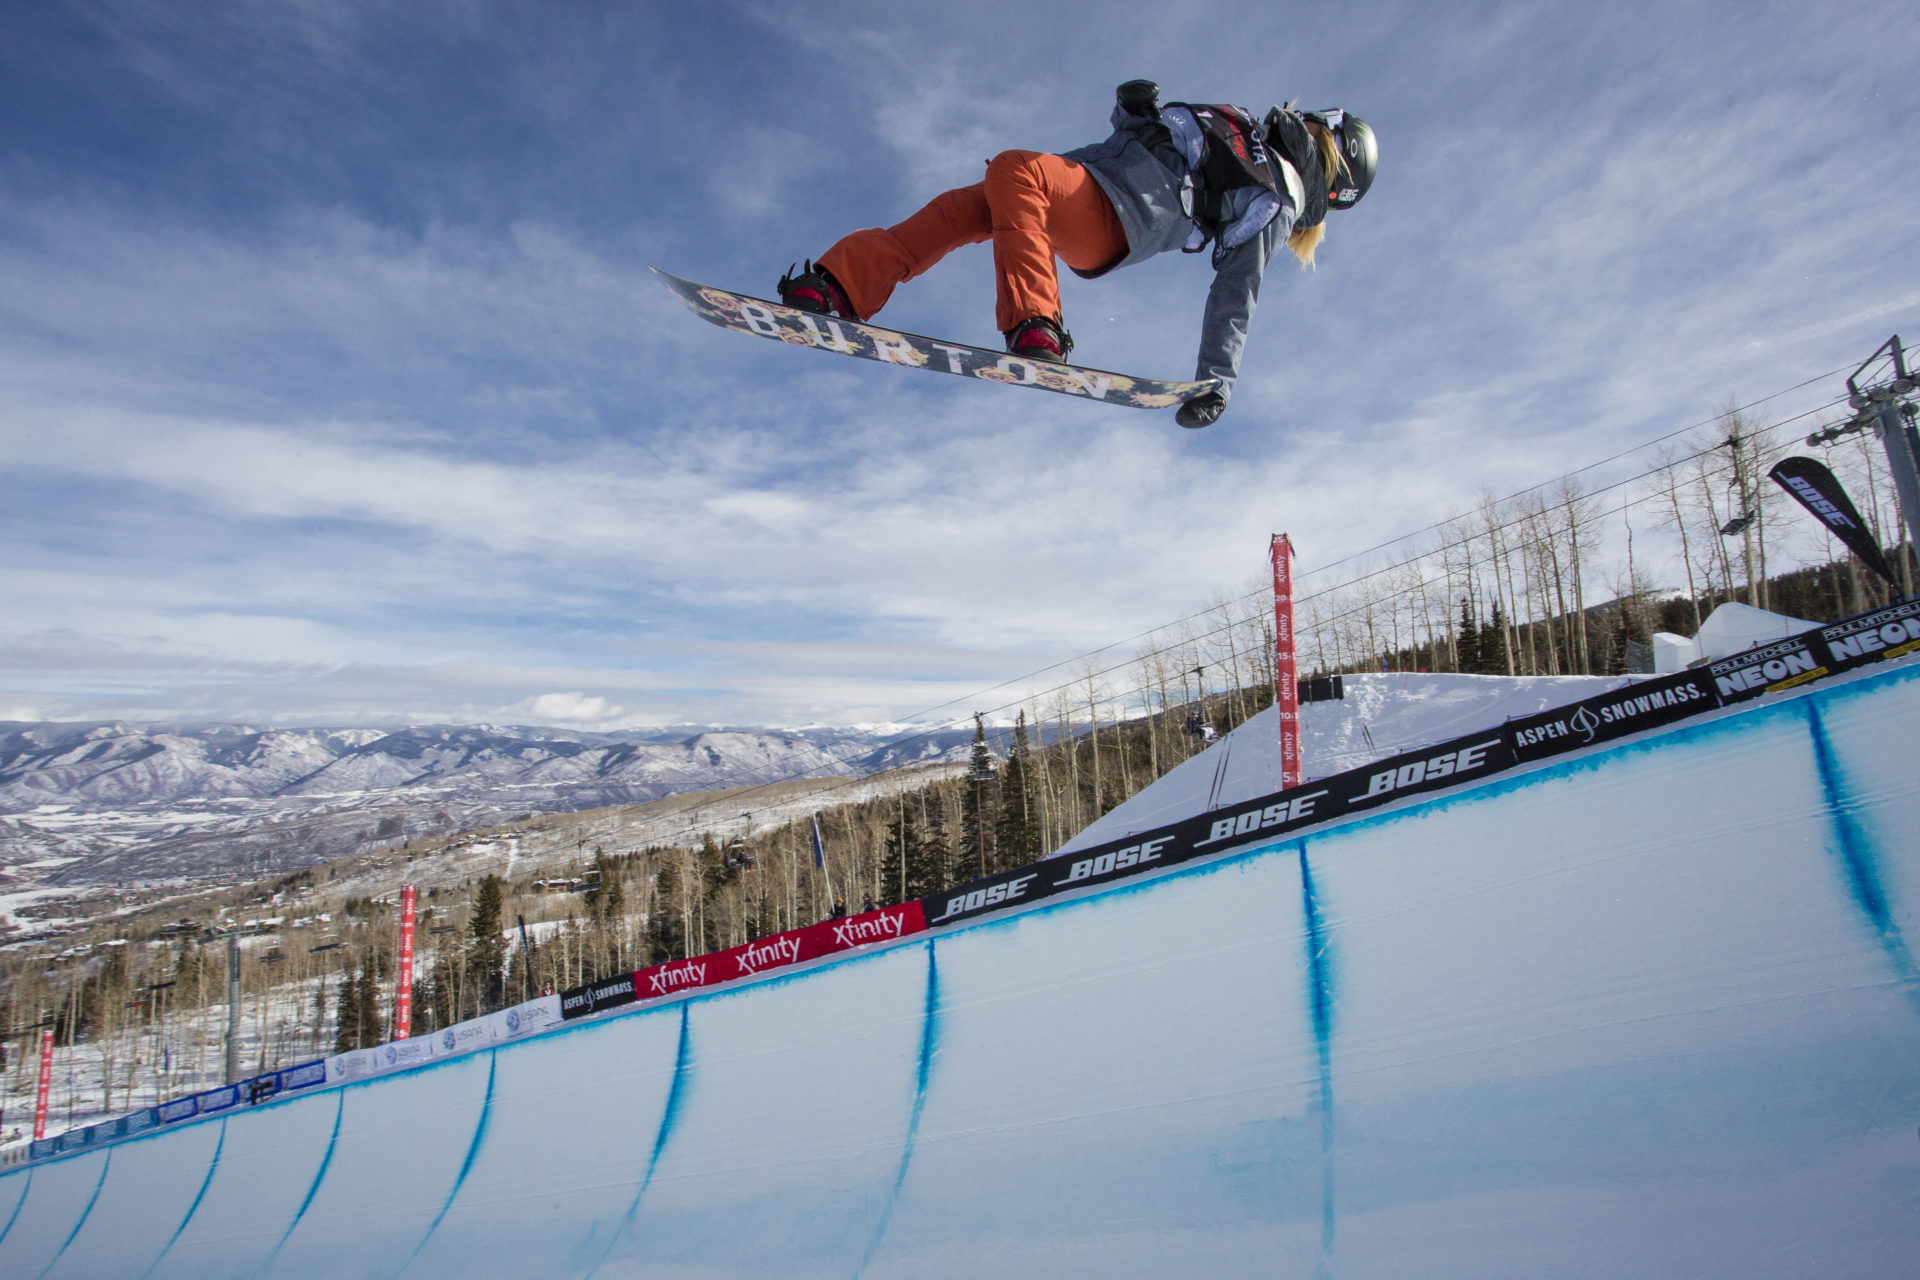 Man snowboarding on halfpipe in Aspen